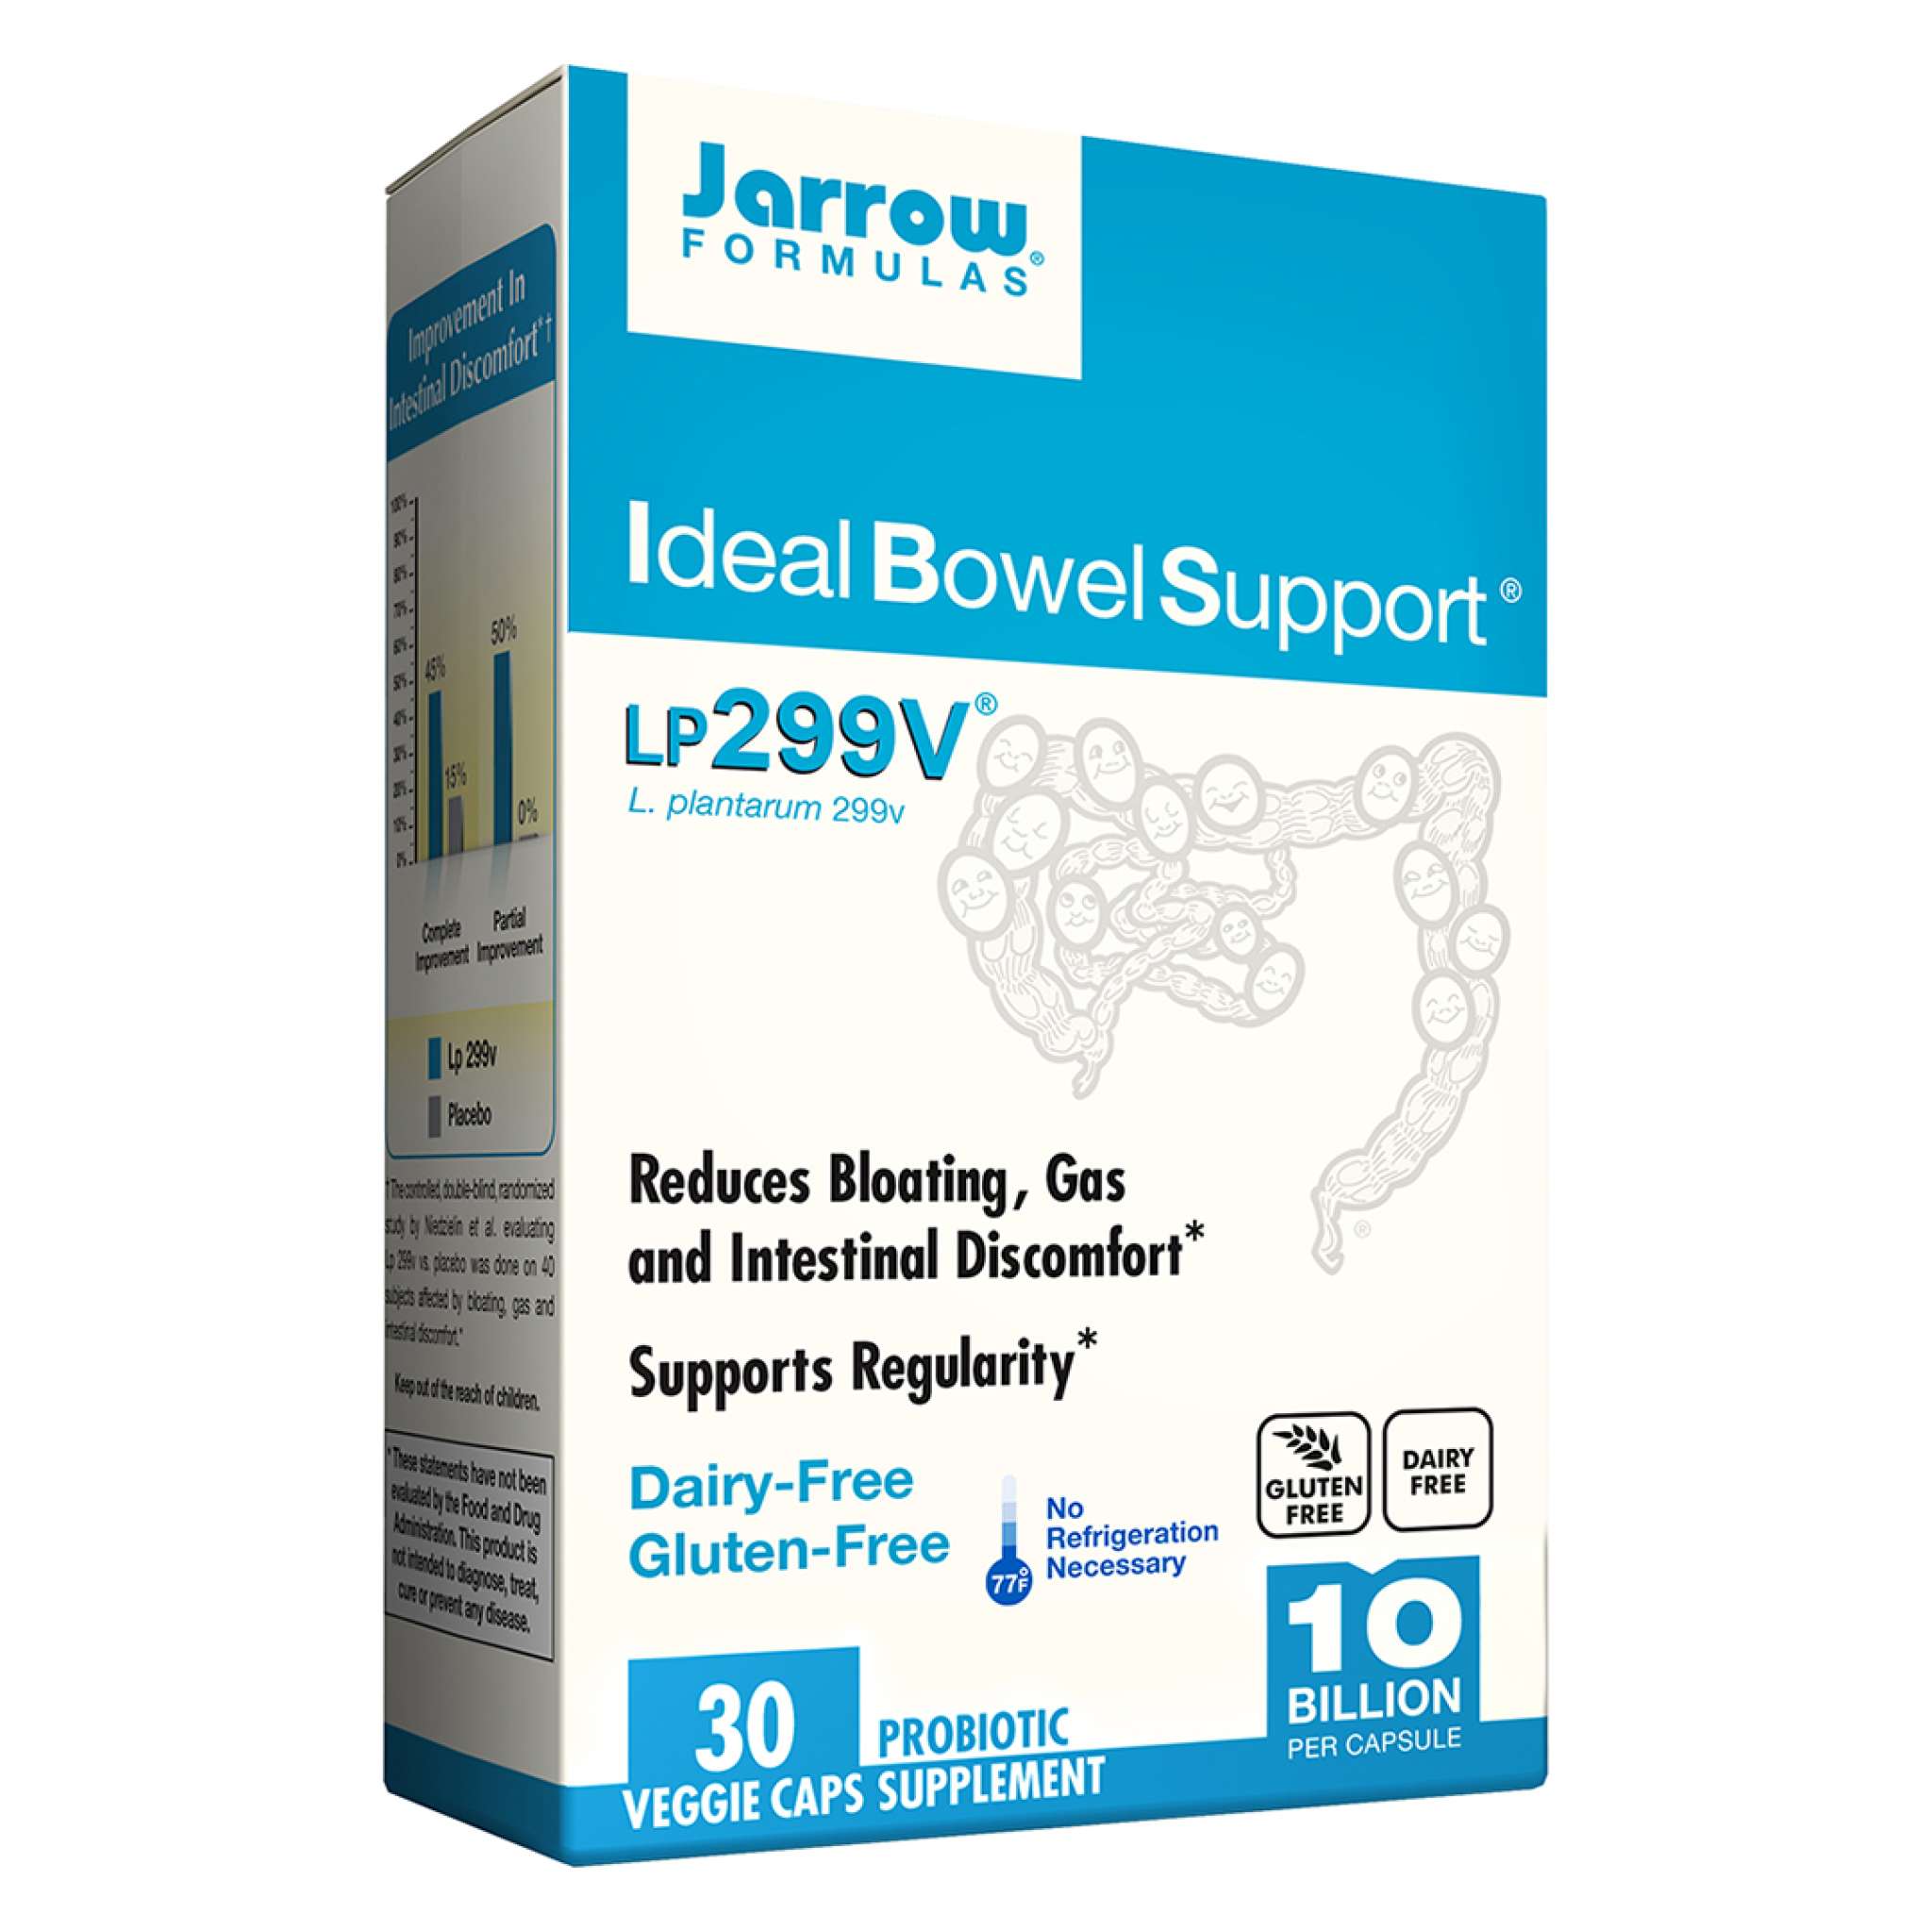 Jarrow Formulas - Ideal Bowel Support